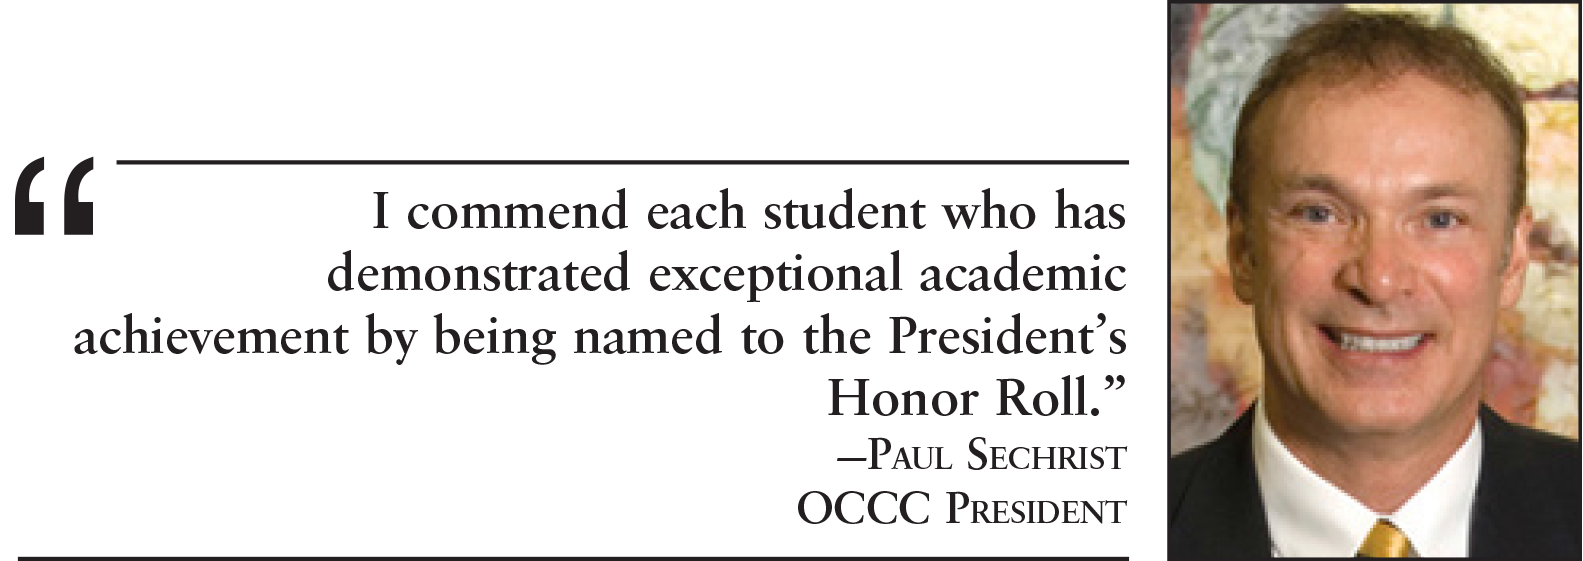 Students make President’s honor roll